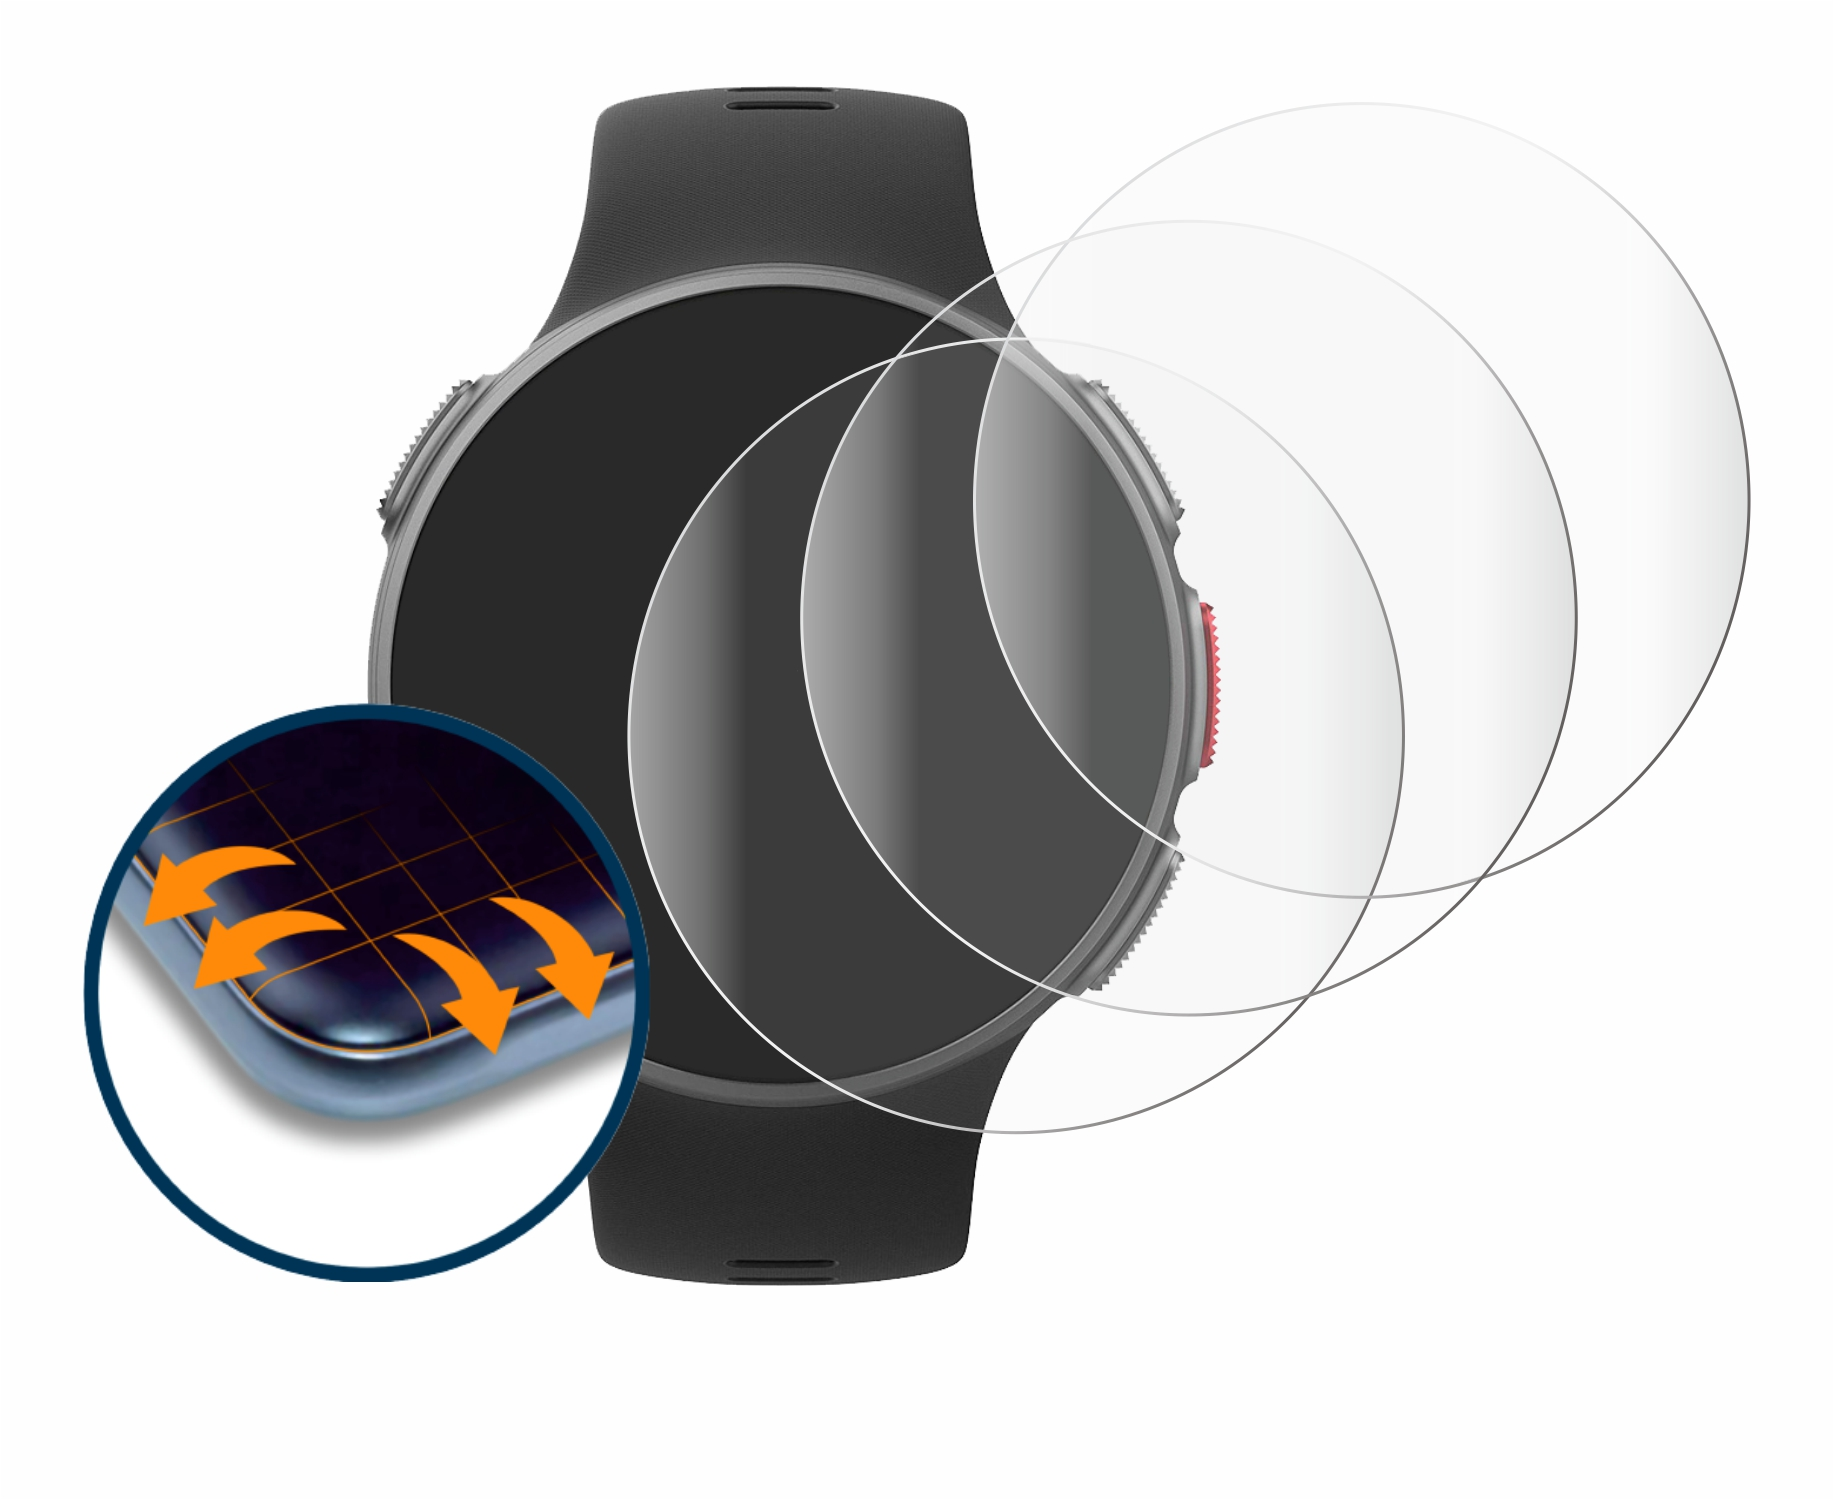 SAVVIES 4x Schutzfolie(für Flex Full-Cover Curved V) Vantage 3D Polar